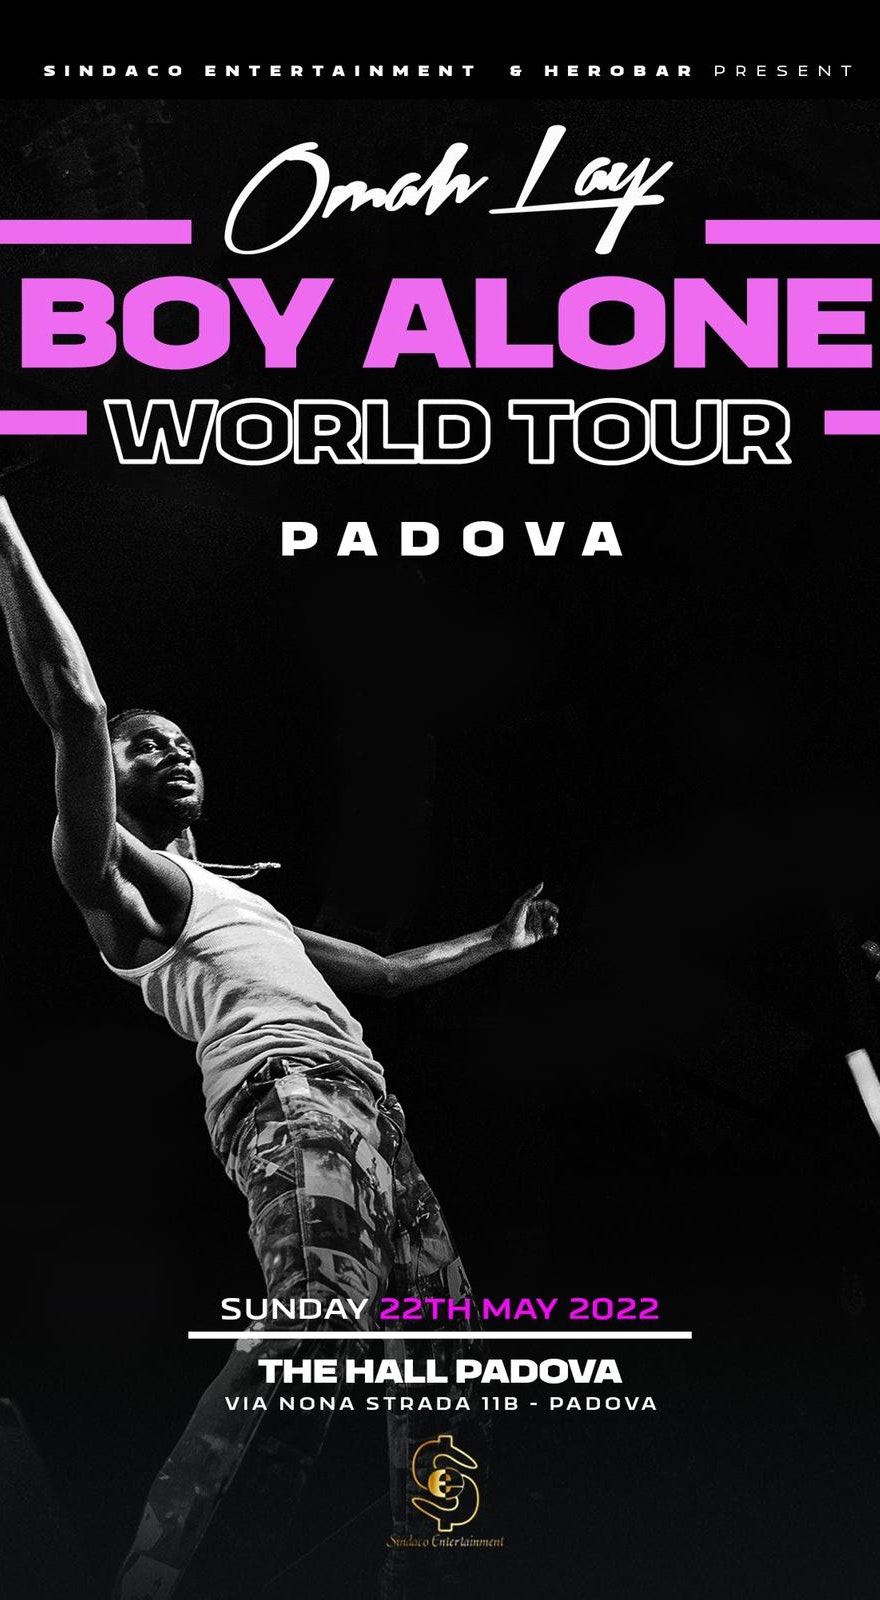 Omah Lay - Boy Alone World Tour, Padova Tickets | From Free | 22 May 2022 @ Hall Padova, Padova | DICE